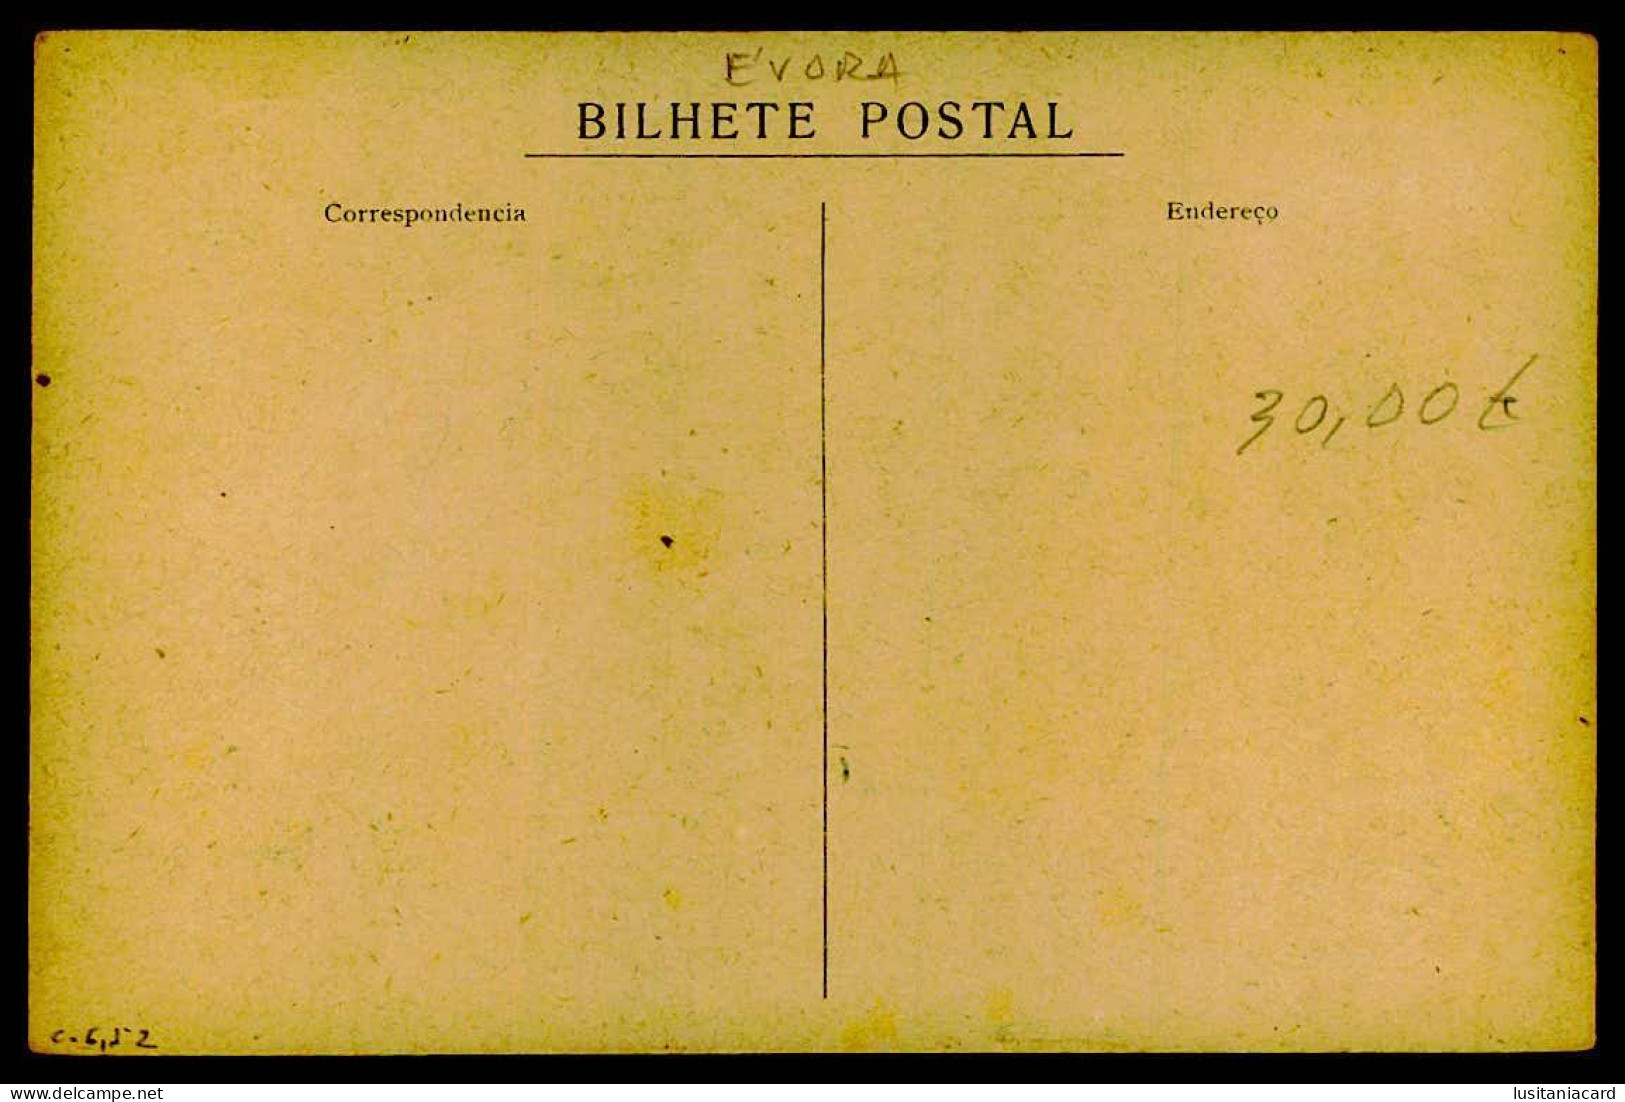 VILA VIÇOSA - Palácio Ducal ( Ed. Rebelo) Carte Postale - Evora